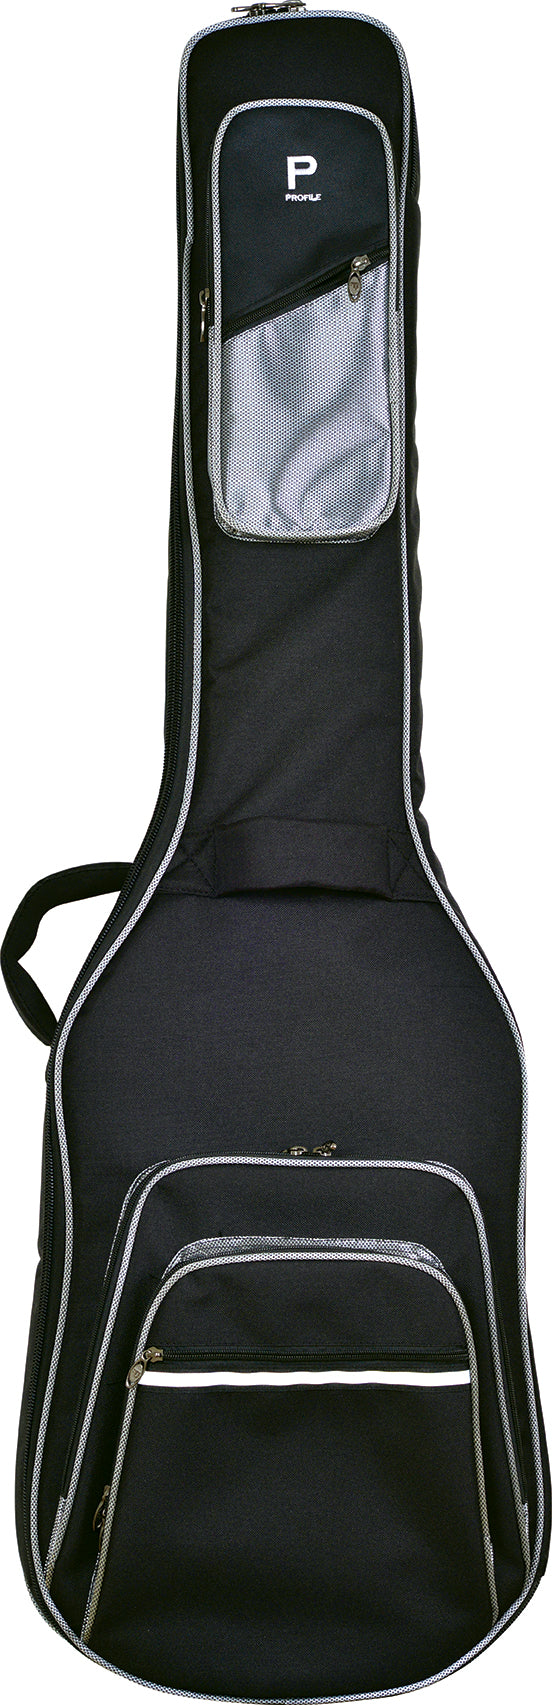 Profile PREB250 Sturdy Electric Guitar Gig Bag